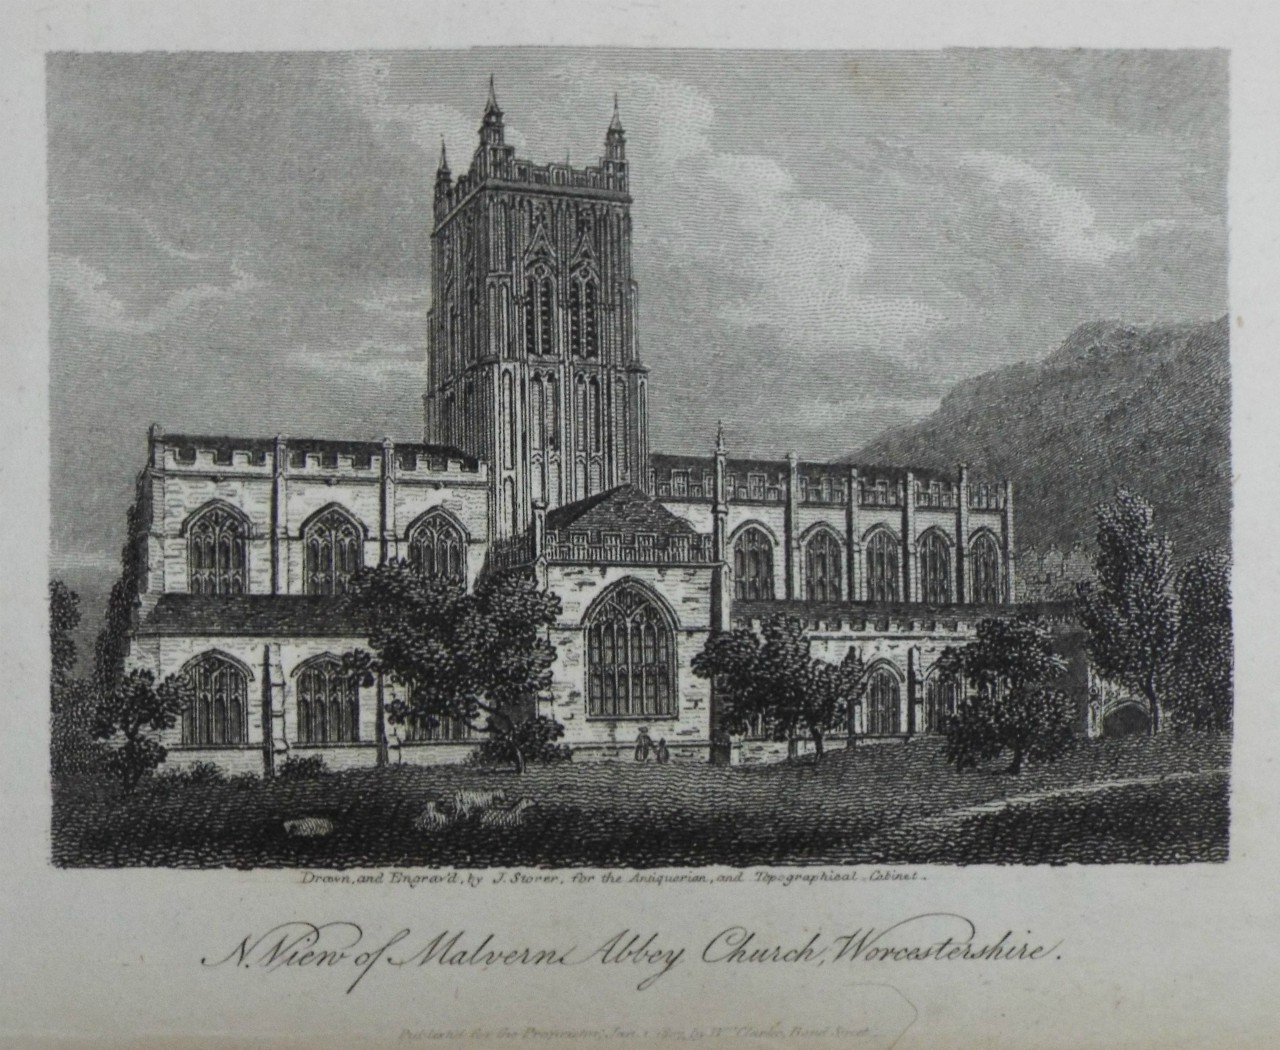 Print - N. View of Malvern Abbey Church, Worcestershire. - Storer